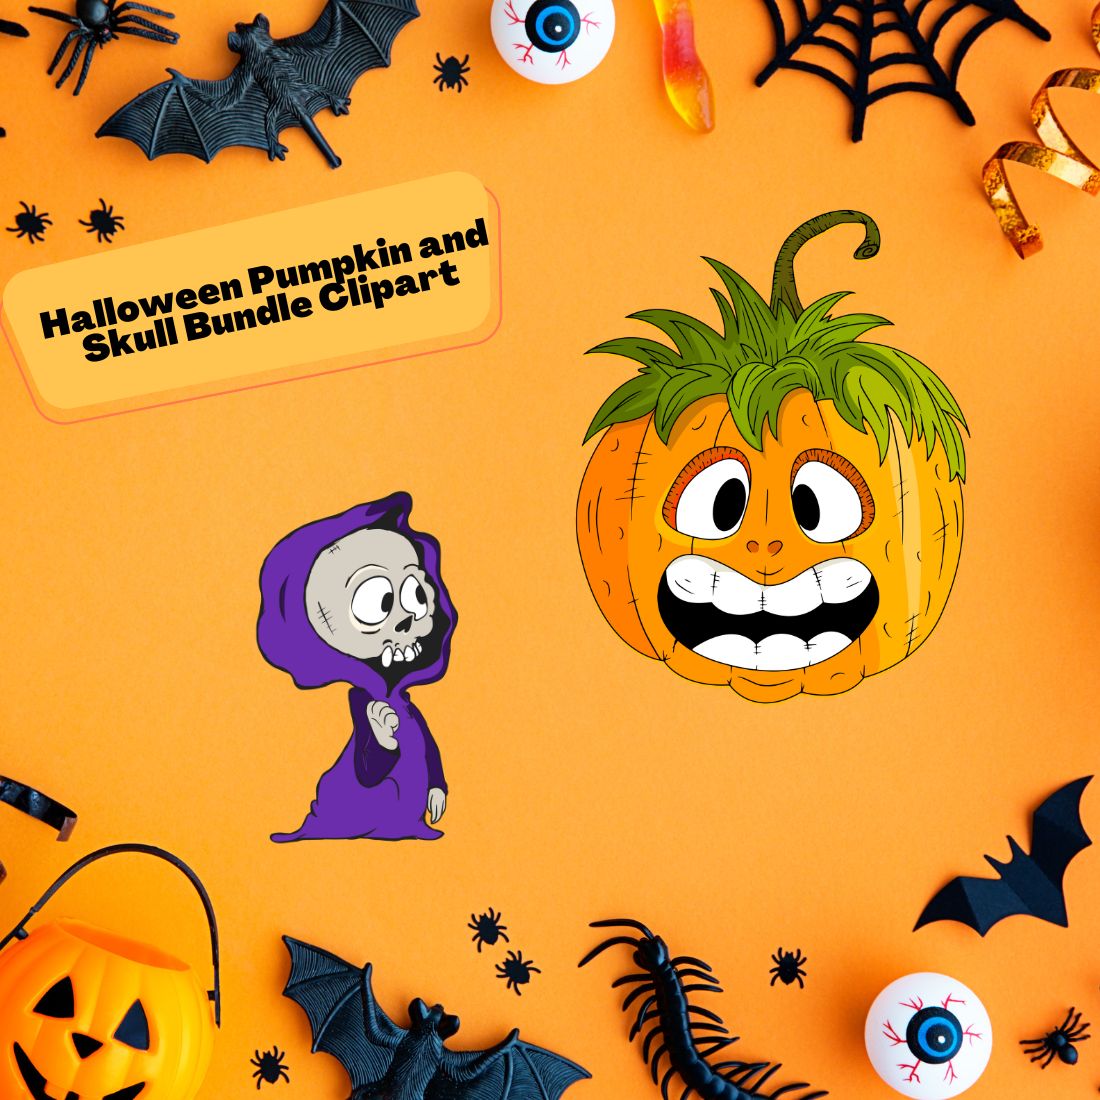 Halloween Pumpkin Bundle - 5 Designs cover image.